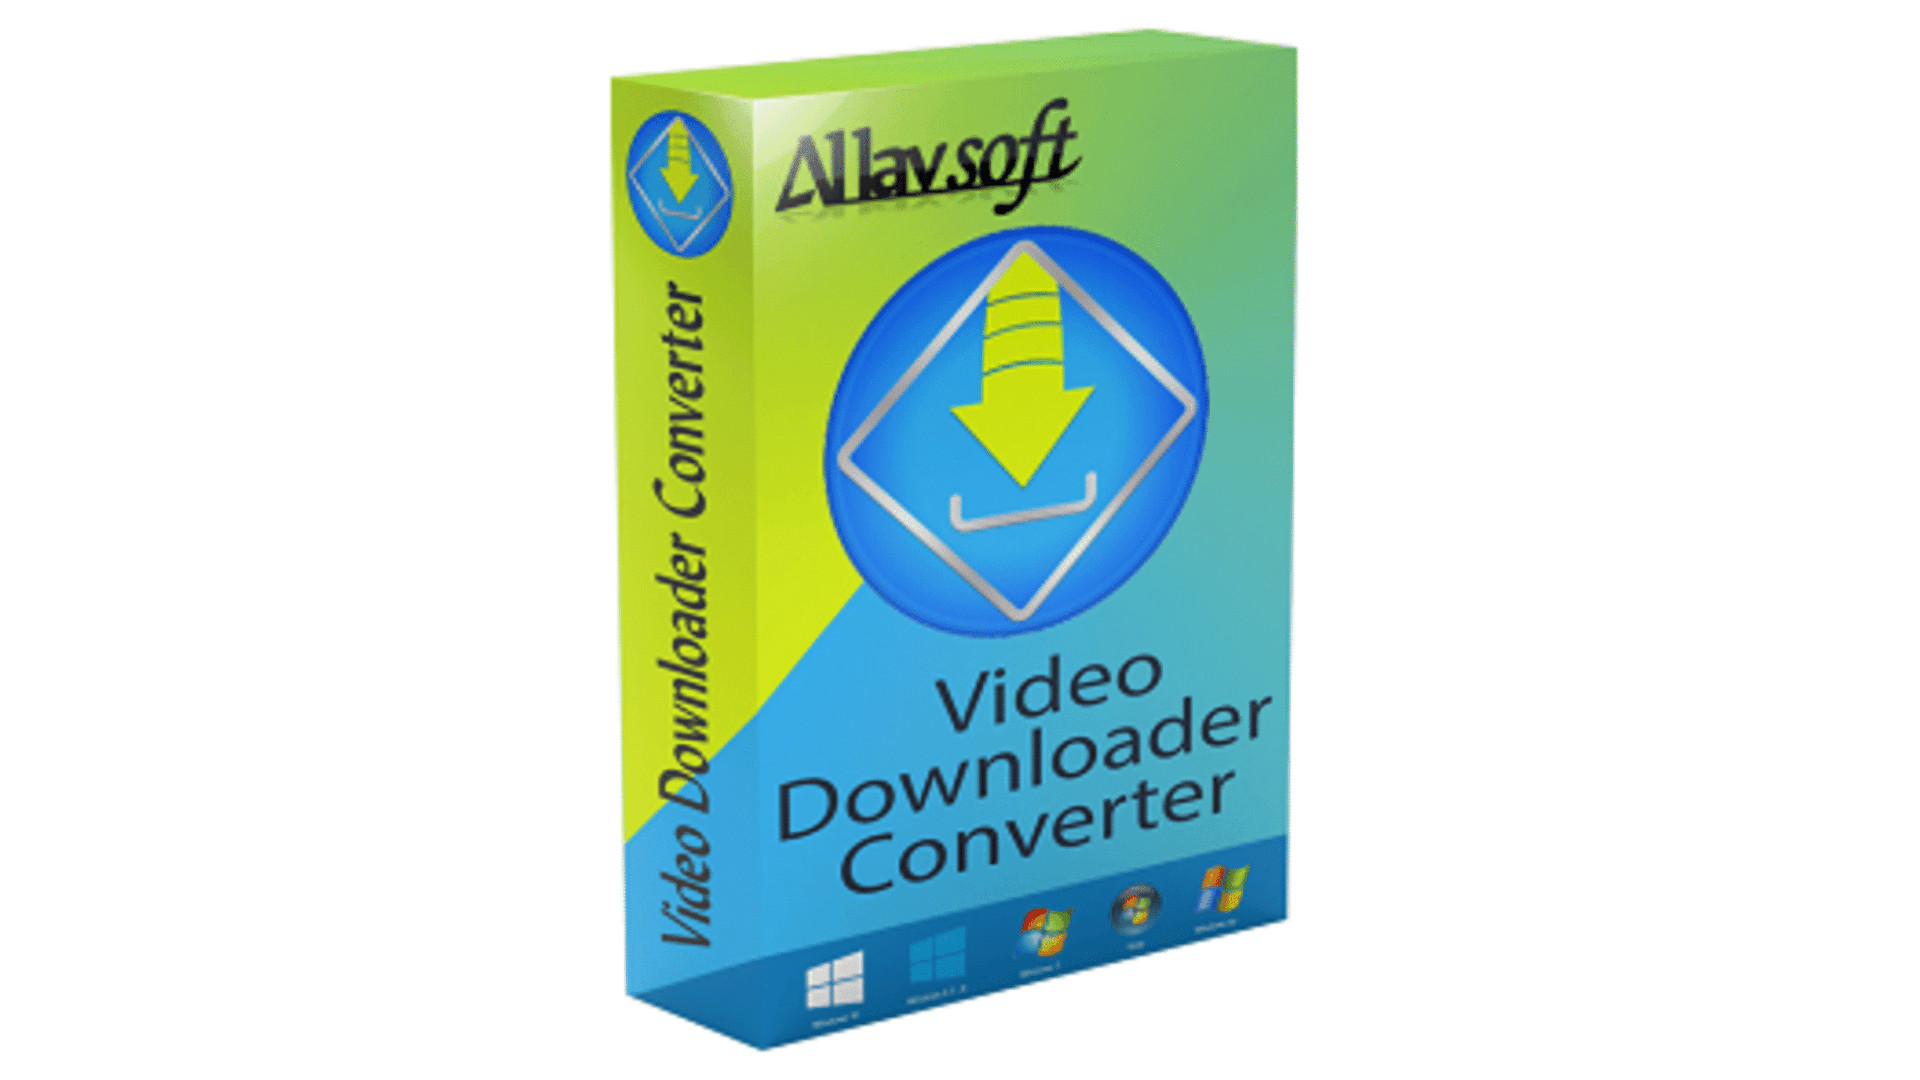 Allavsoft Video Downloader and Converter for Windows CD Key [$ 2.75]